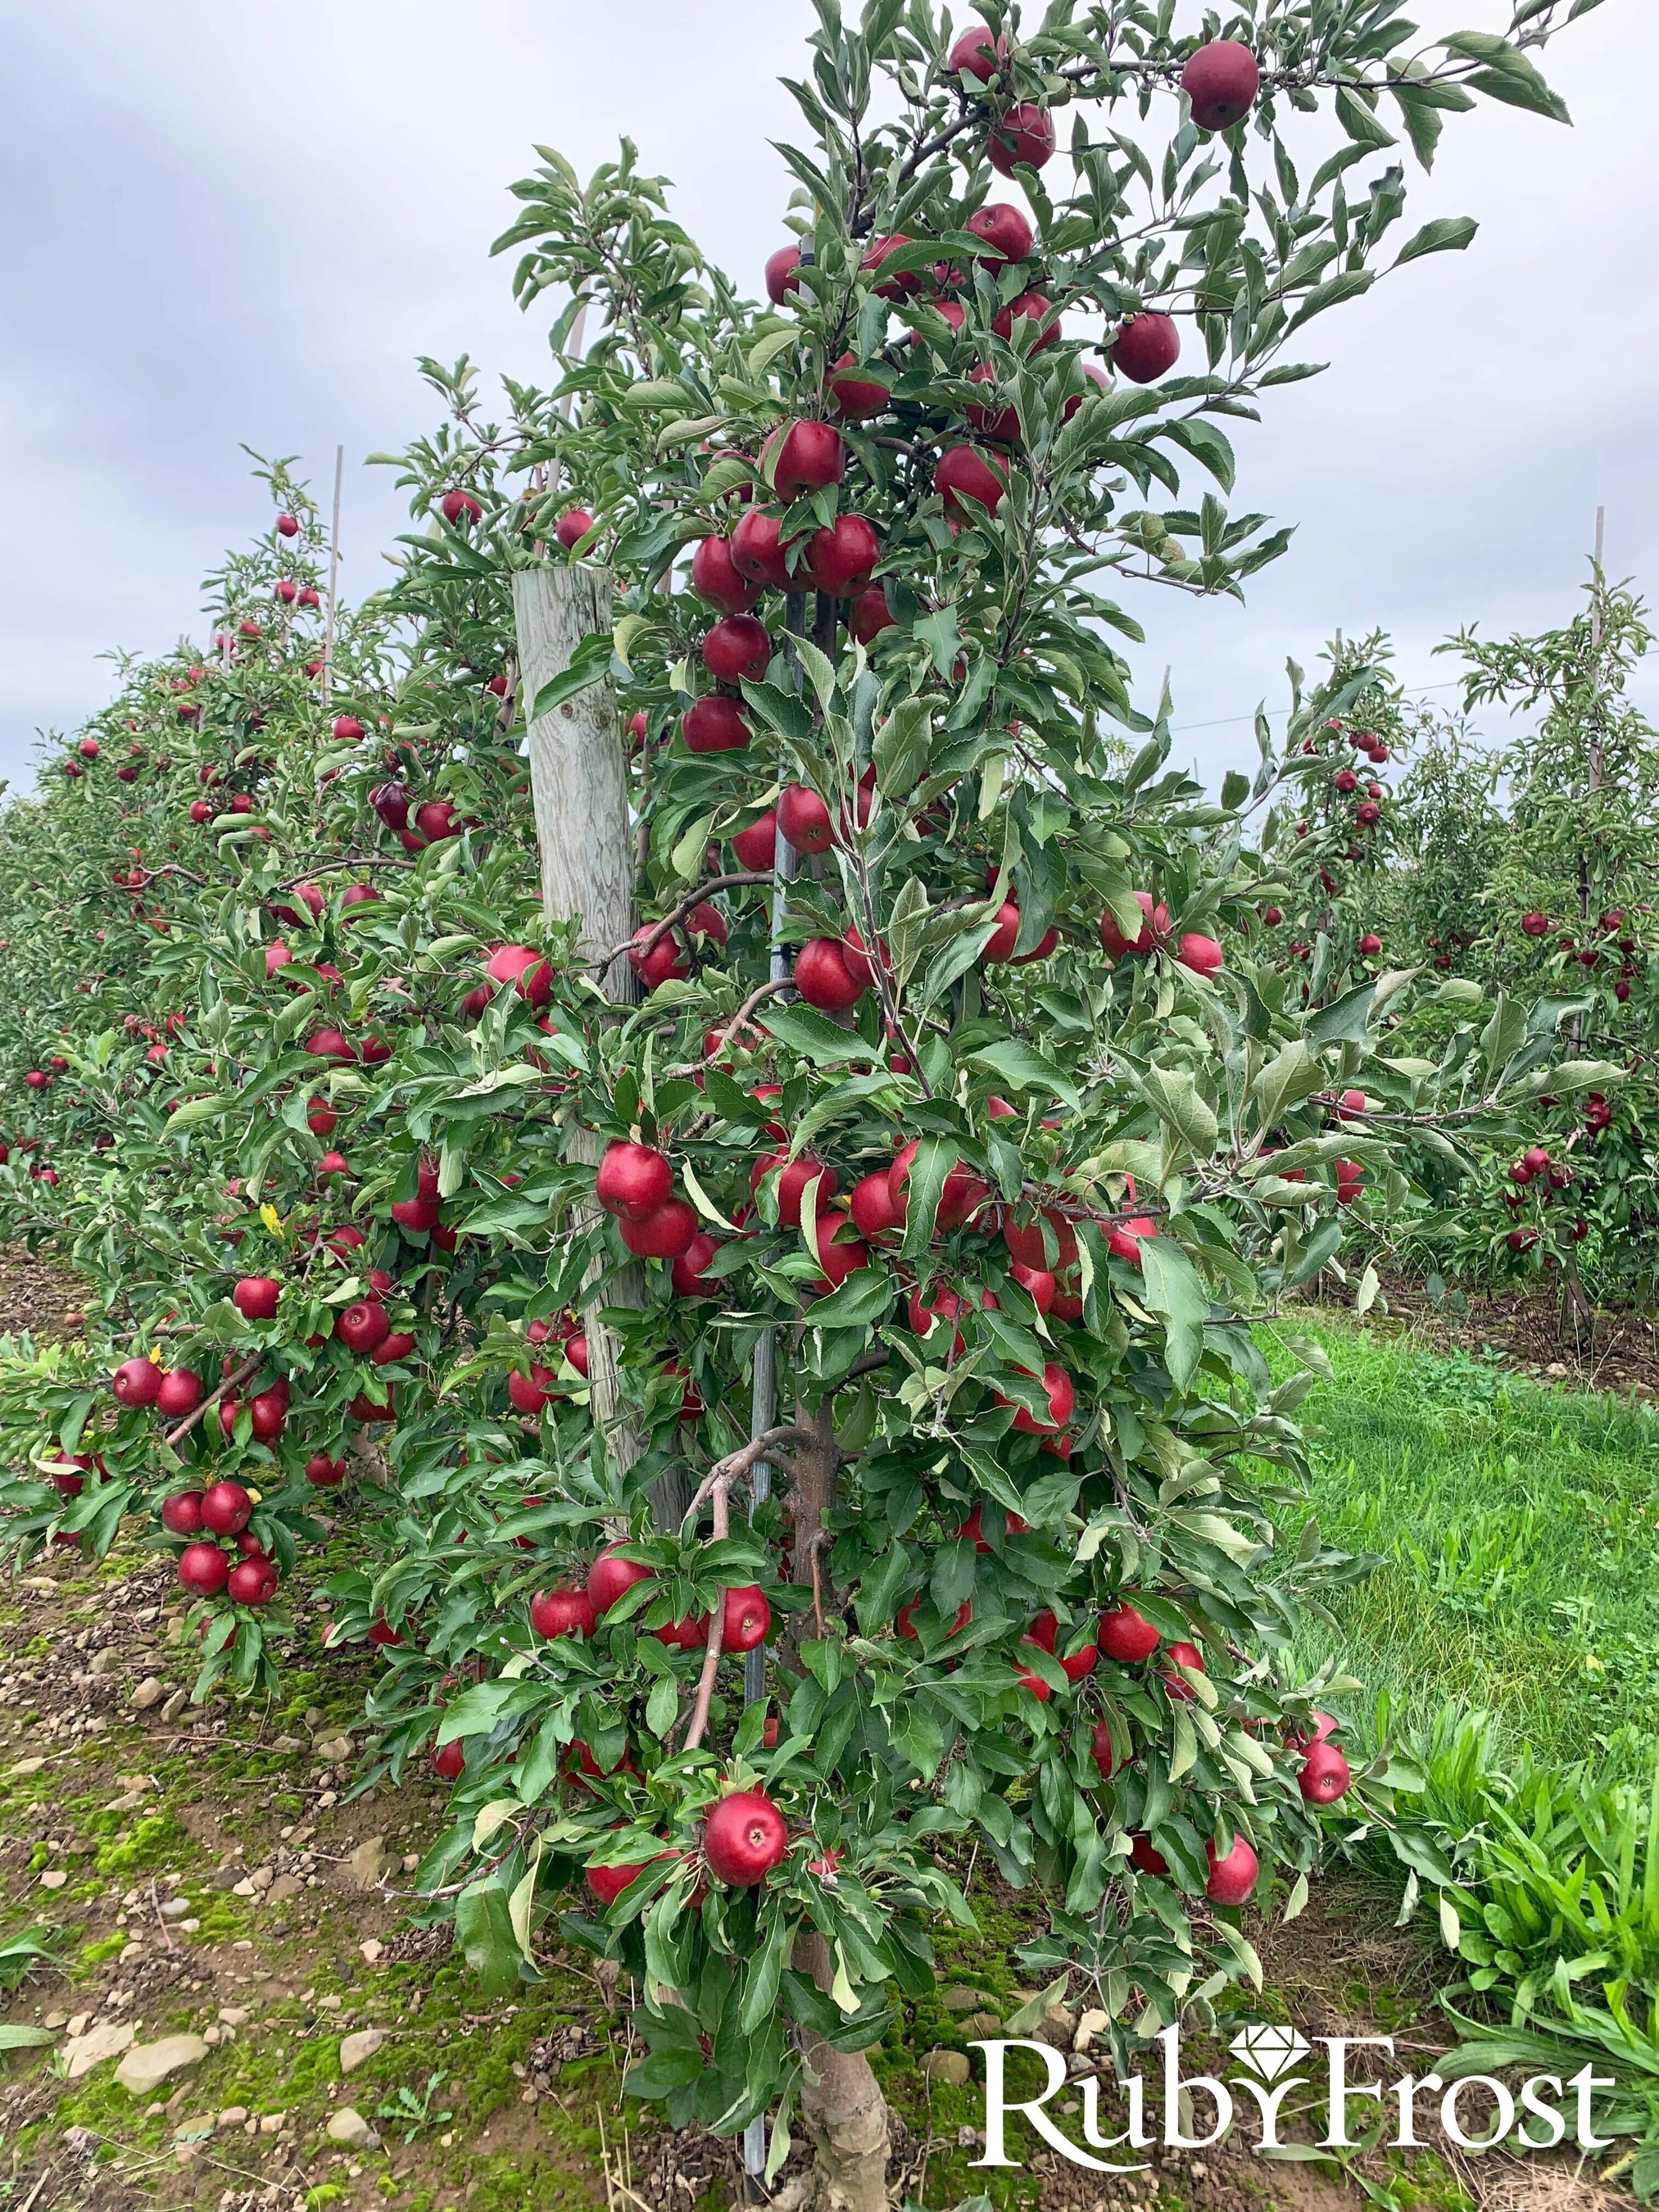 Ida Red Apples - Riveridge Produce Marketing, INC.